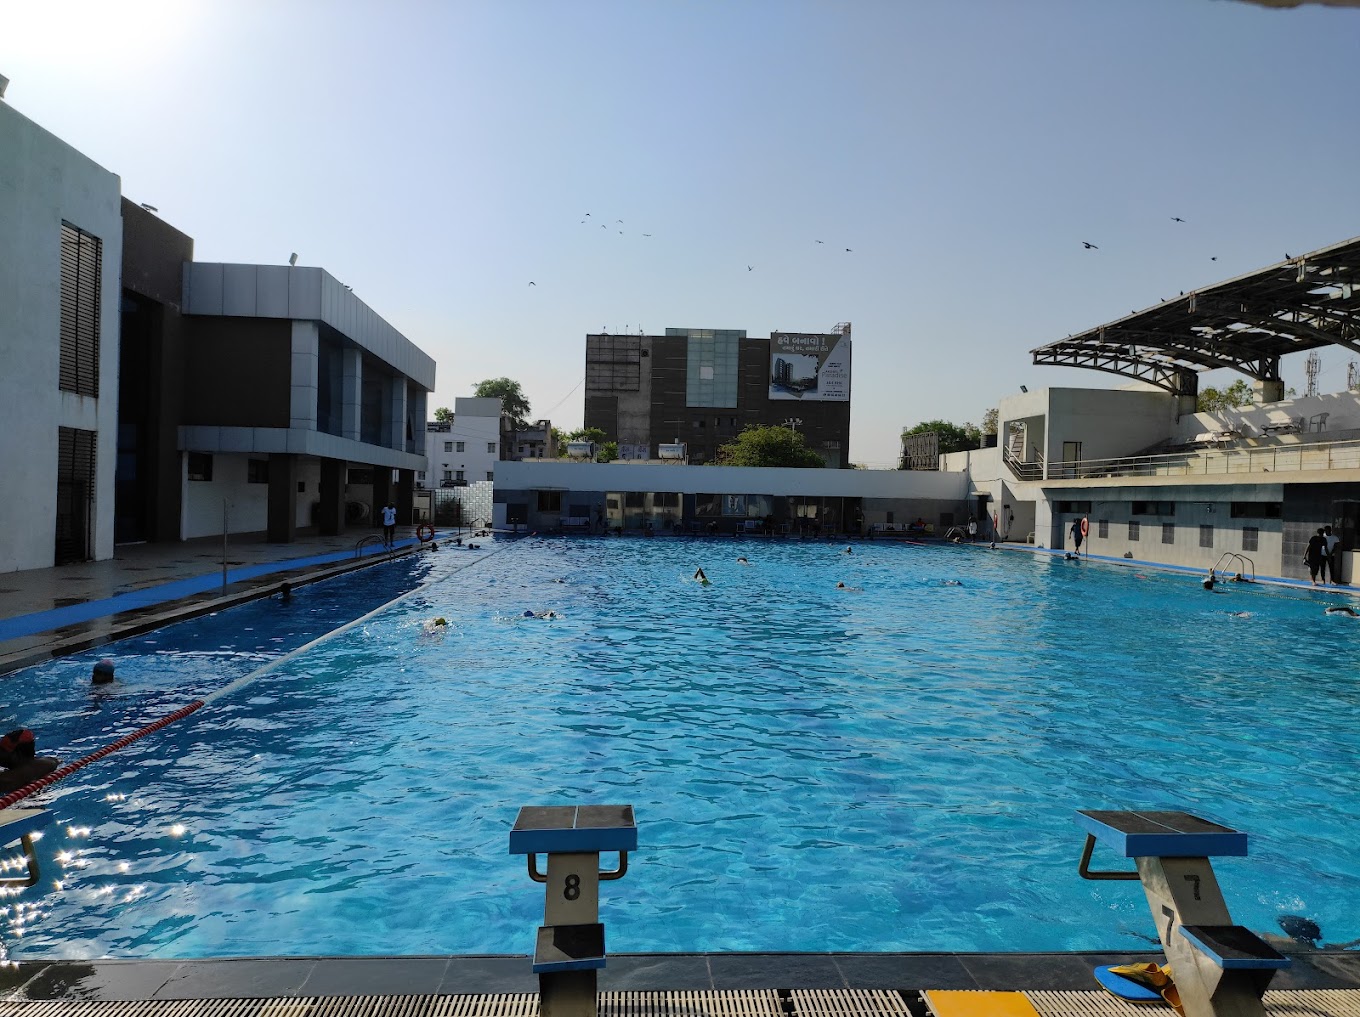 Gymkhana Swimming Pool